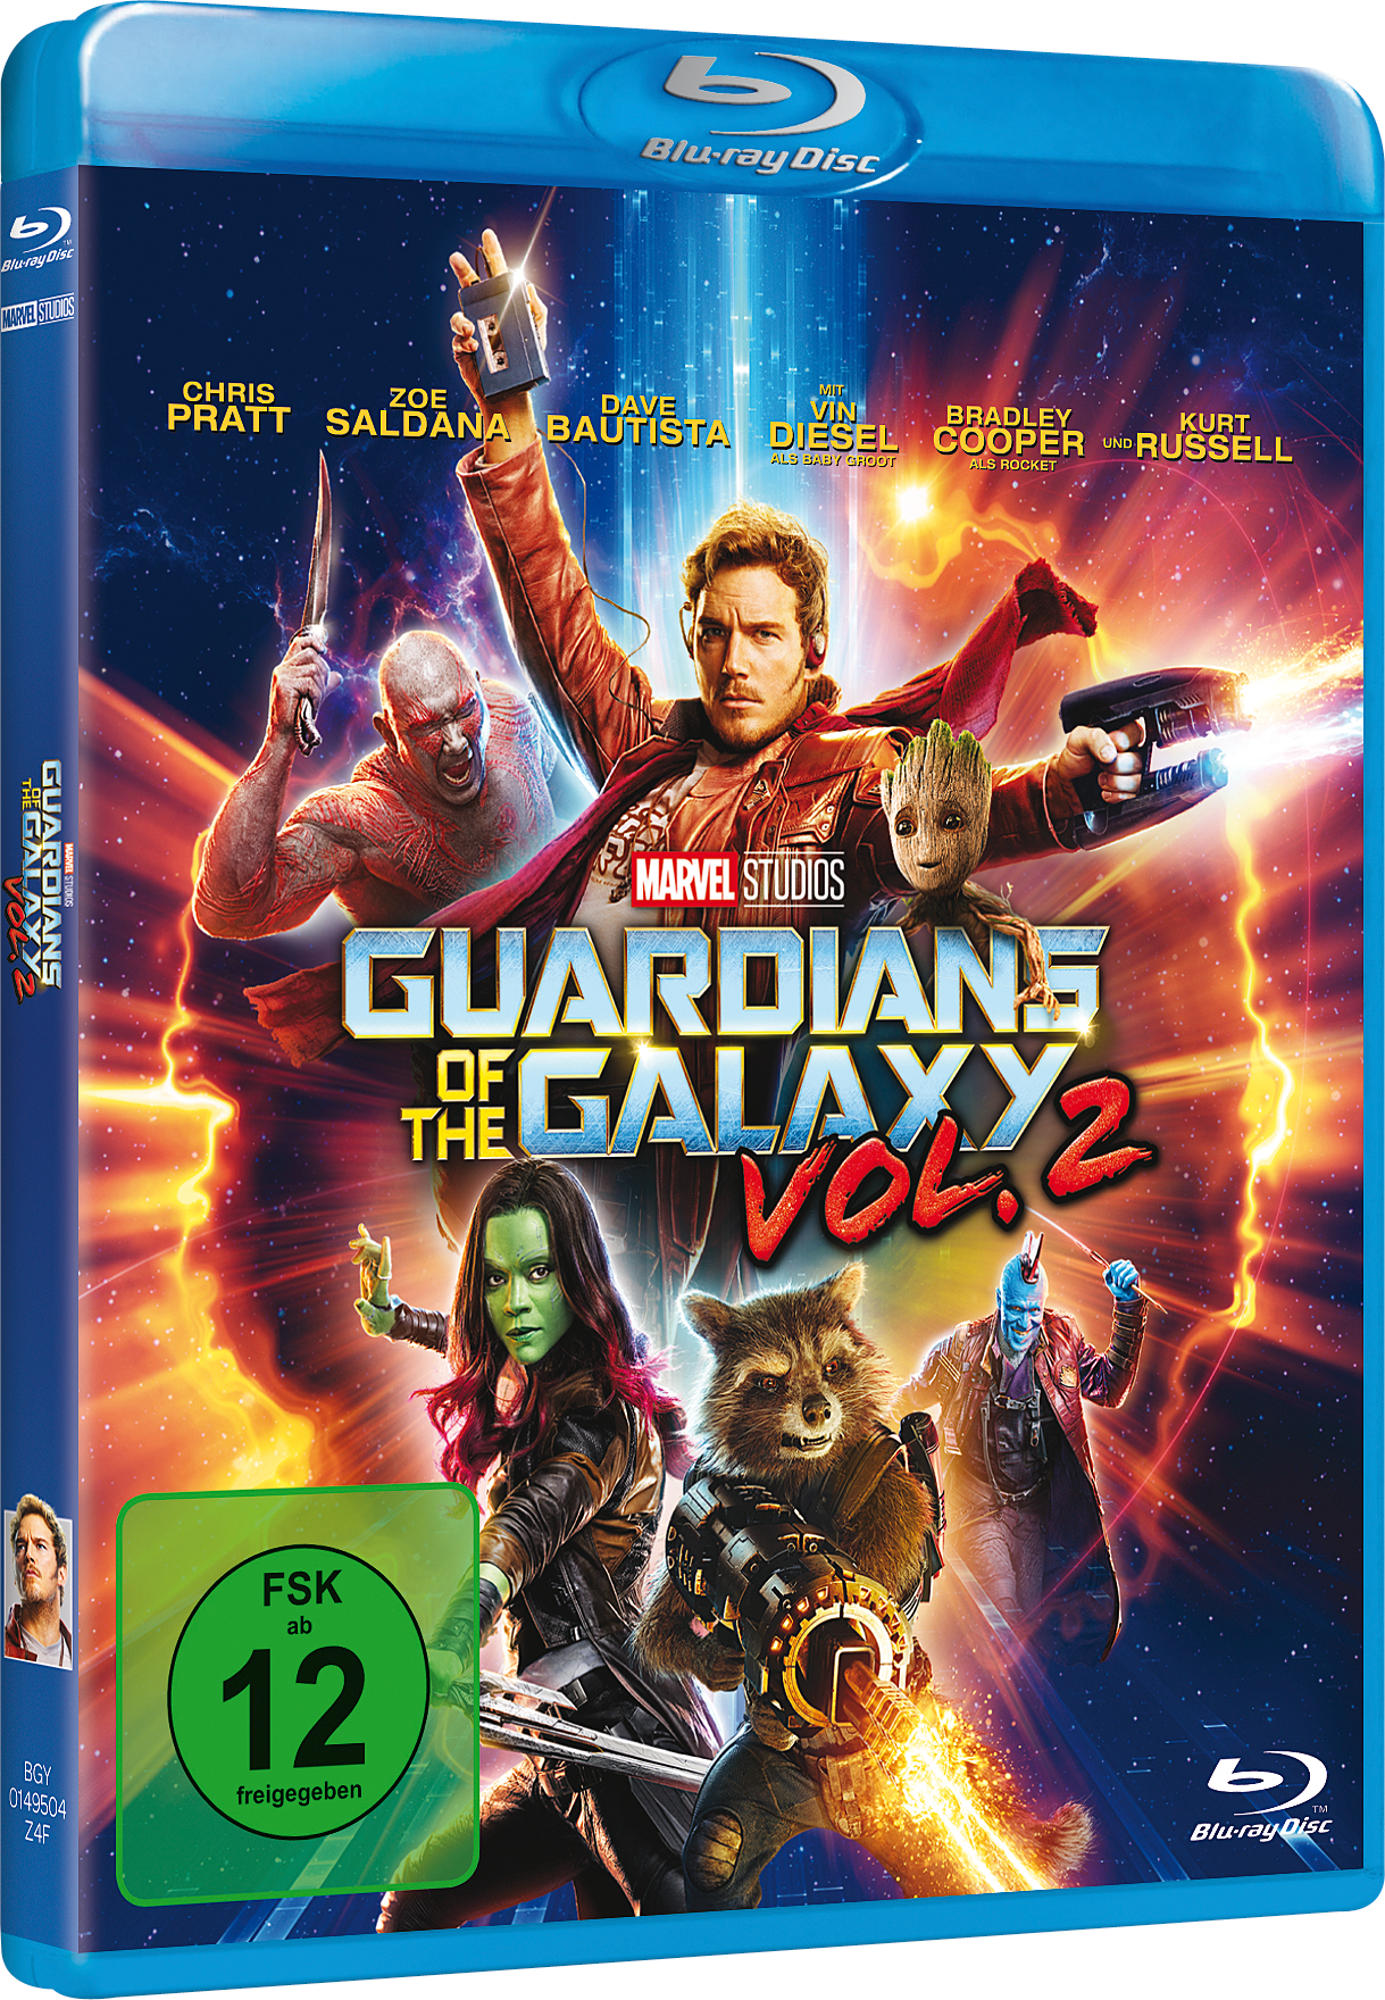 Guardians of the Galaxy Vol. 2 Blu-ray